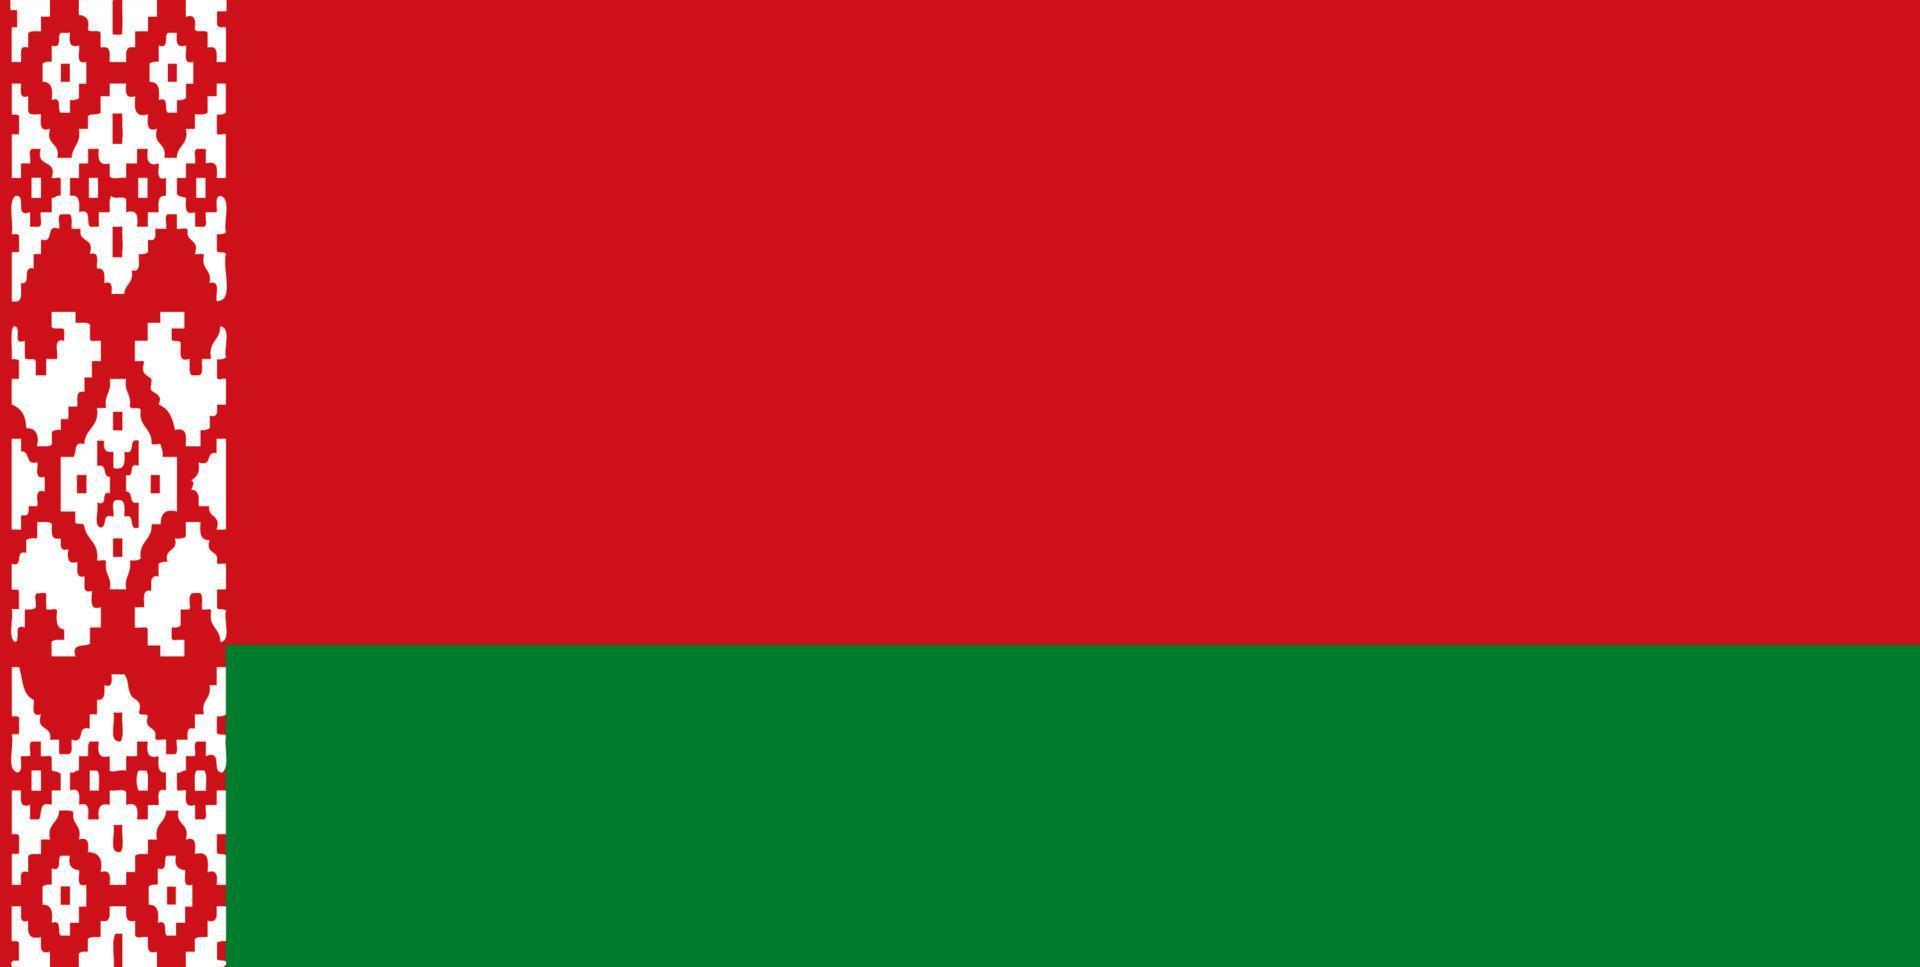 vlag van wit-rusland vector